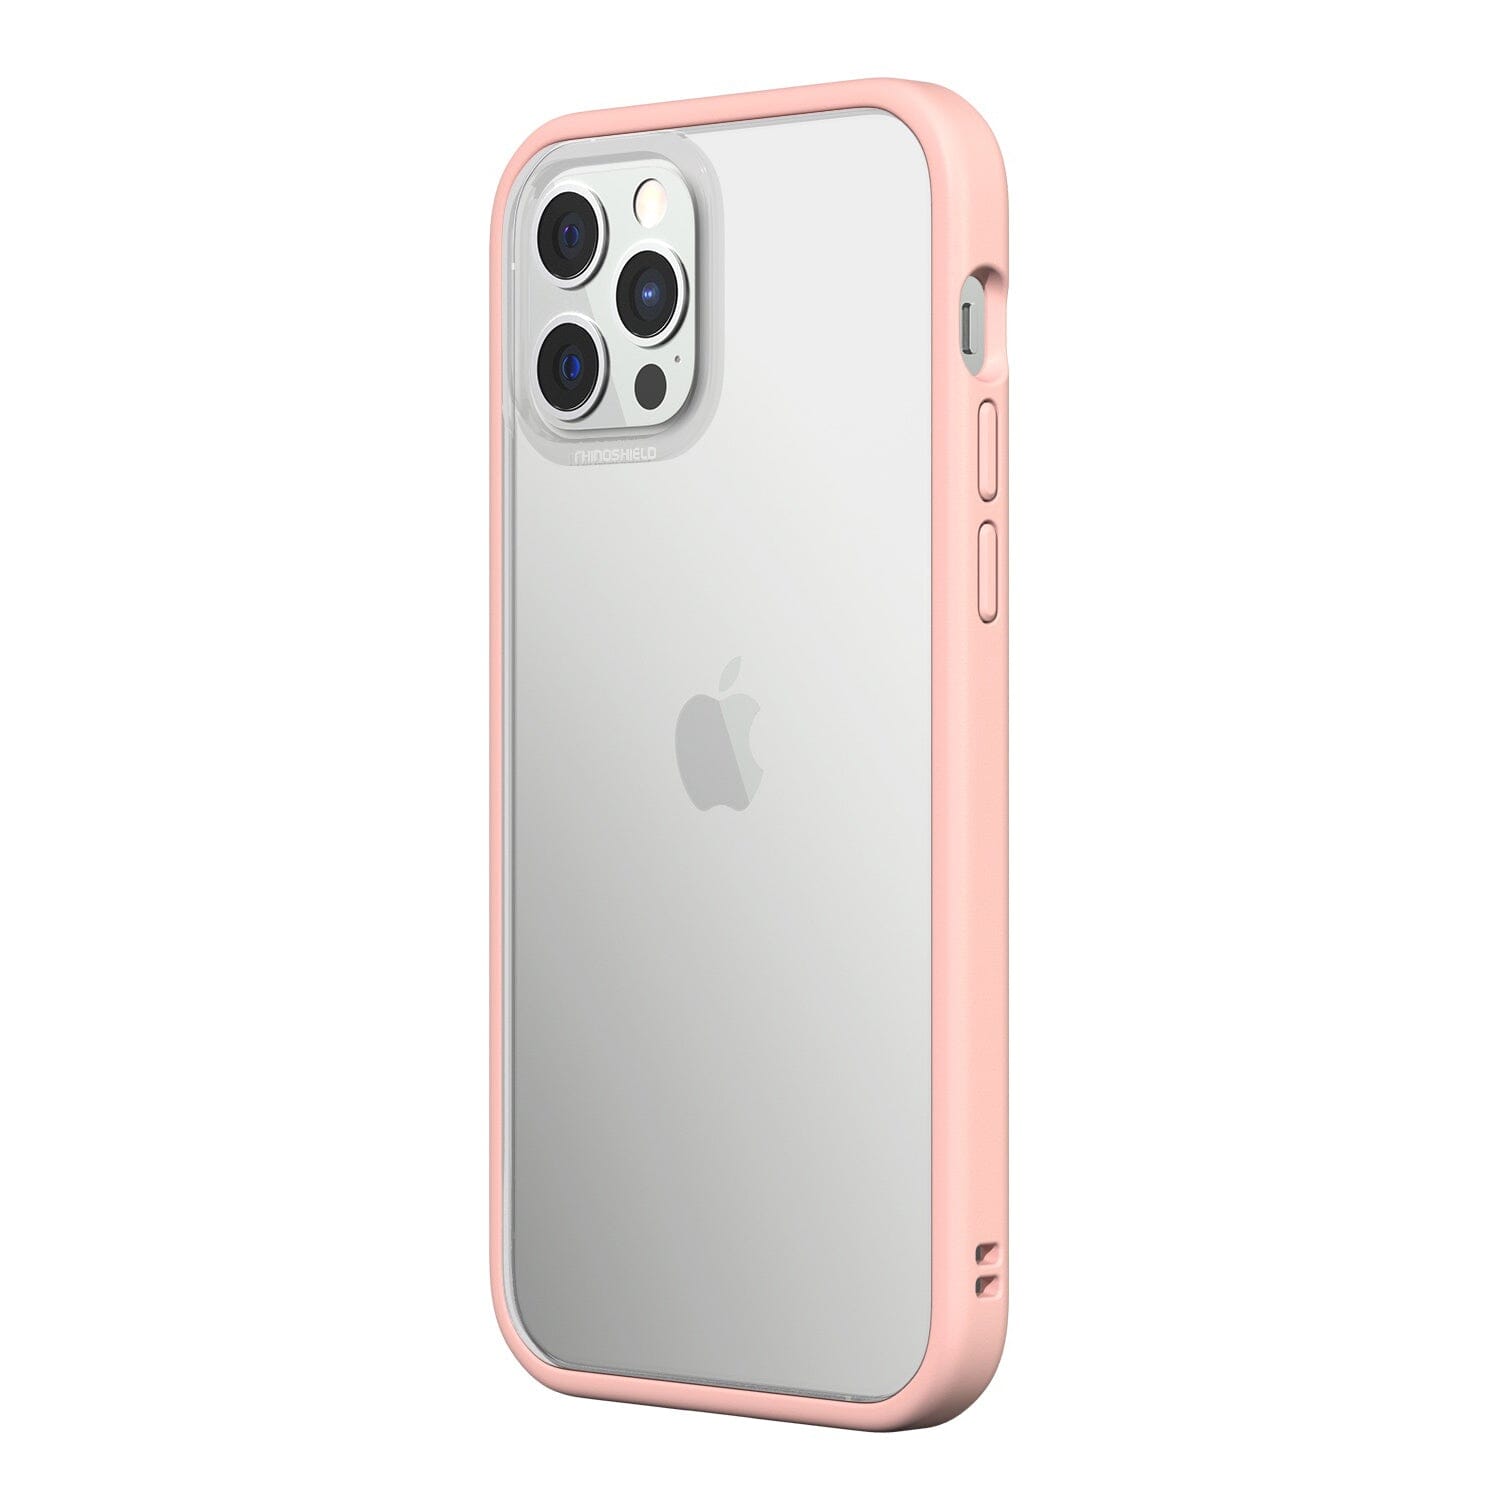 RhinoShield Mod NX Modular Case for iPhone 12 Series (2020) iPhone 12 Series RhinoShield iPhone 12/12 Pro 6.1" Blush Pink 